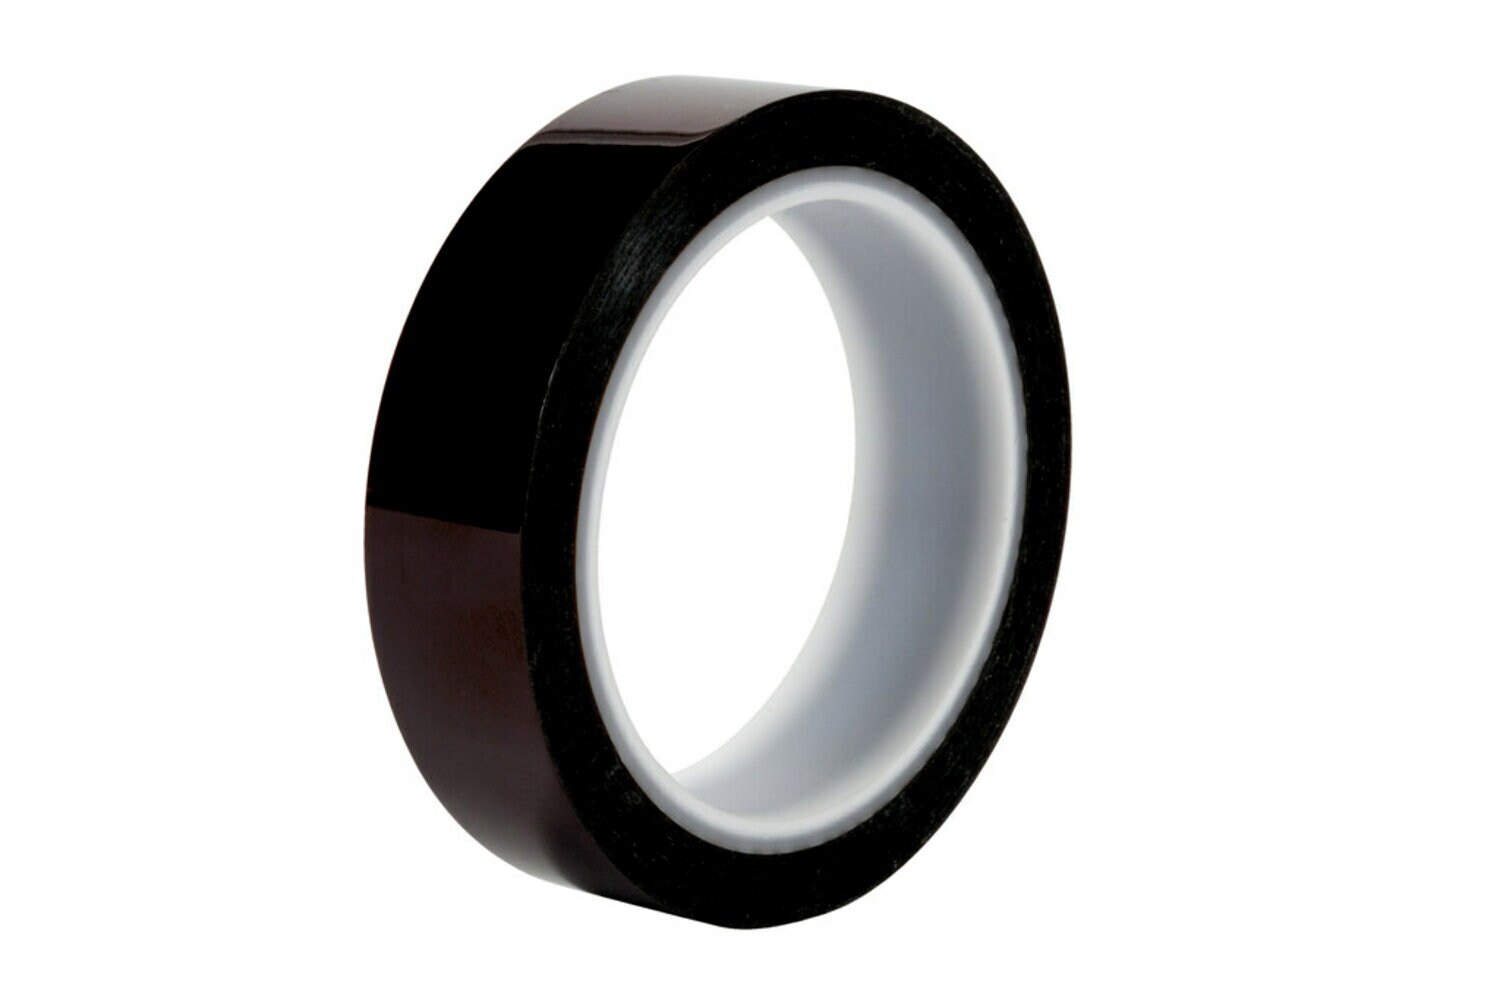 7100061140 - 3M Polyimide Tape 8998, Dark Amber, 1/2 in x 36 yd, 3.3 mil, 72 rolls
per case